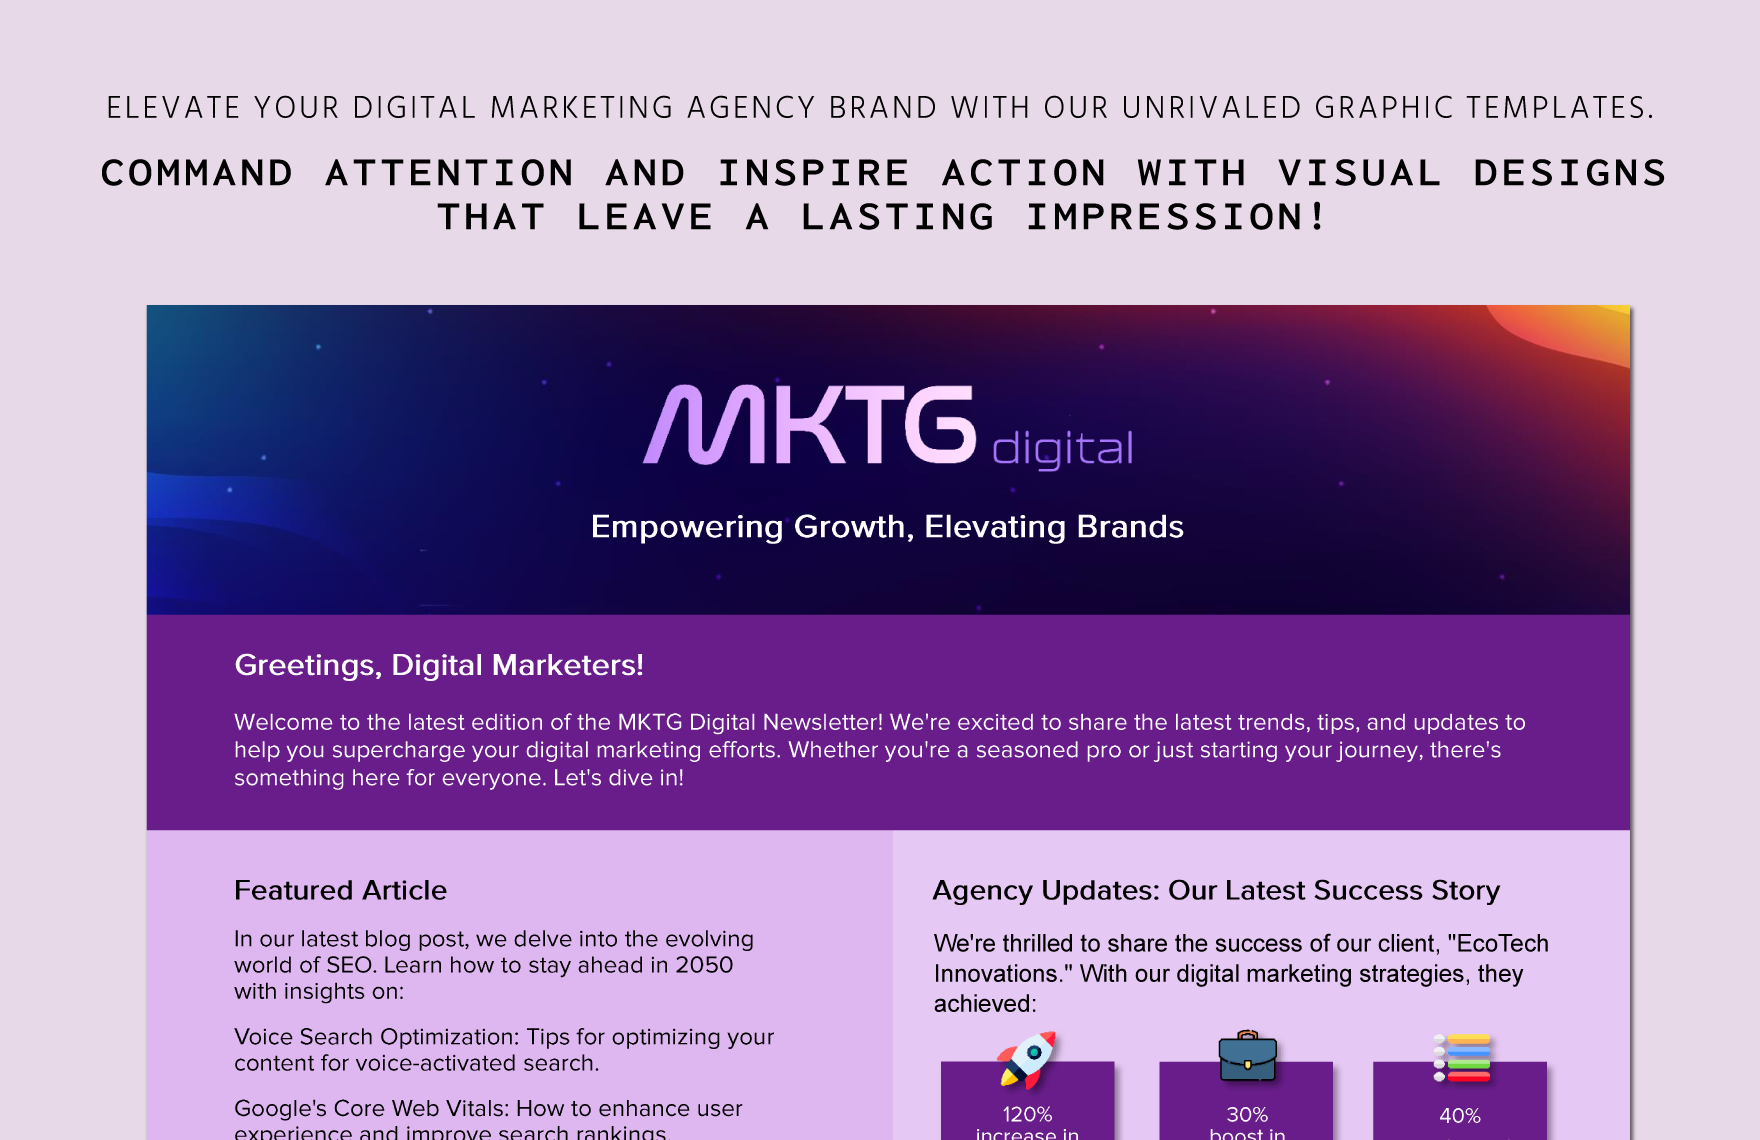 Digital Marketing Agency Email Newsletter Design Template